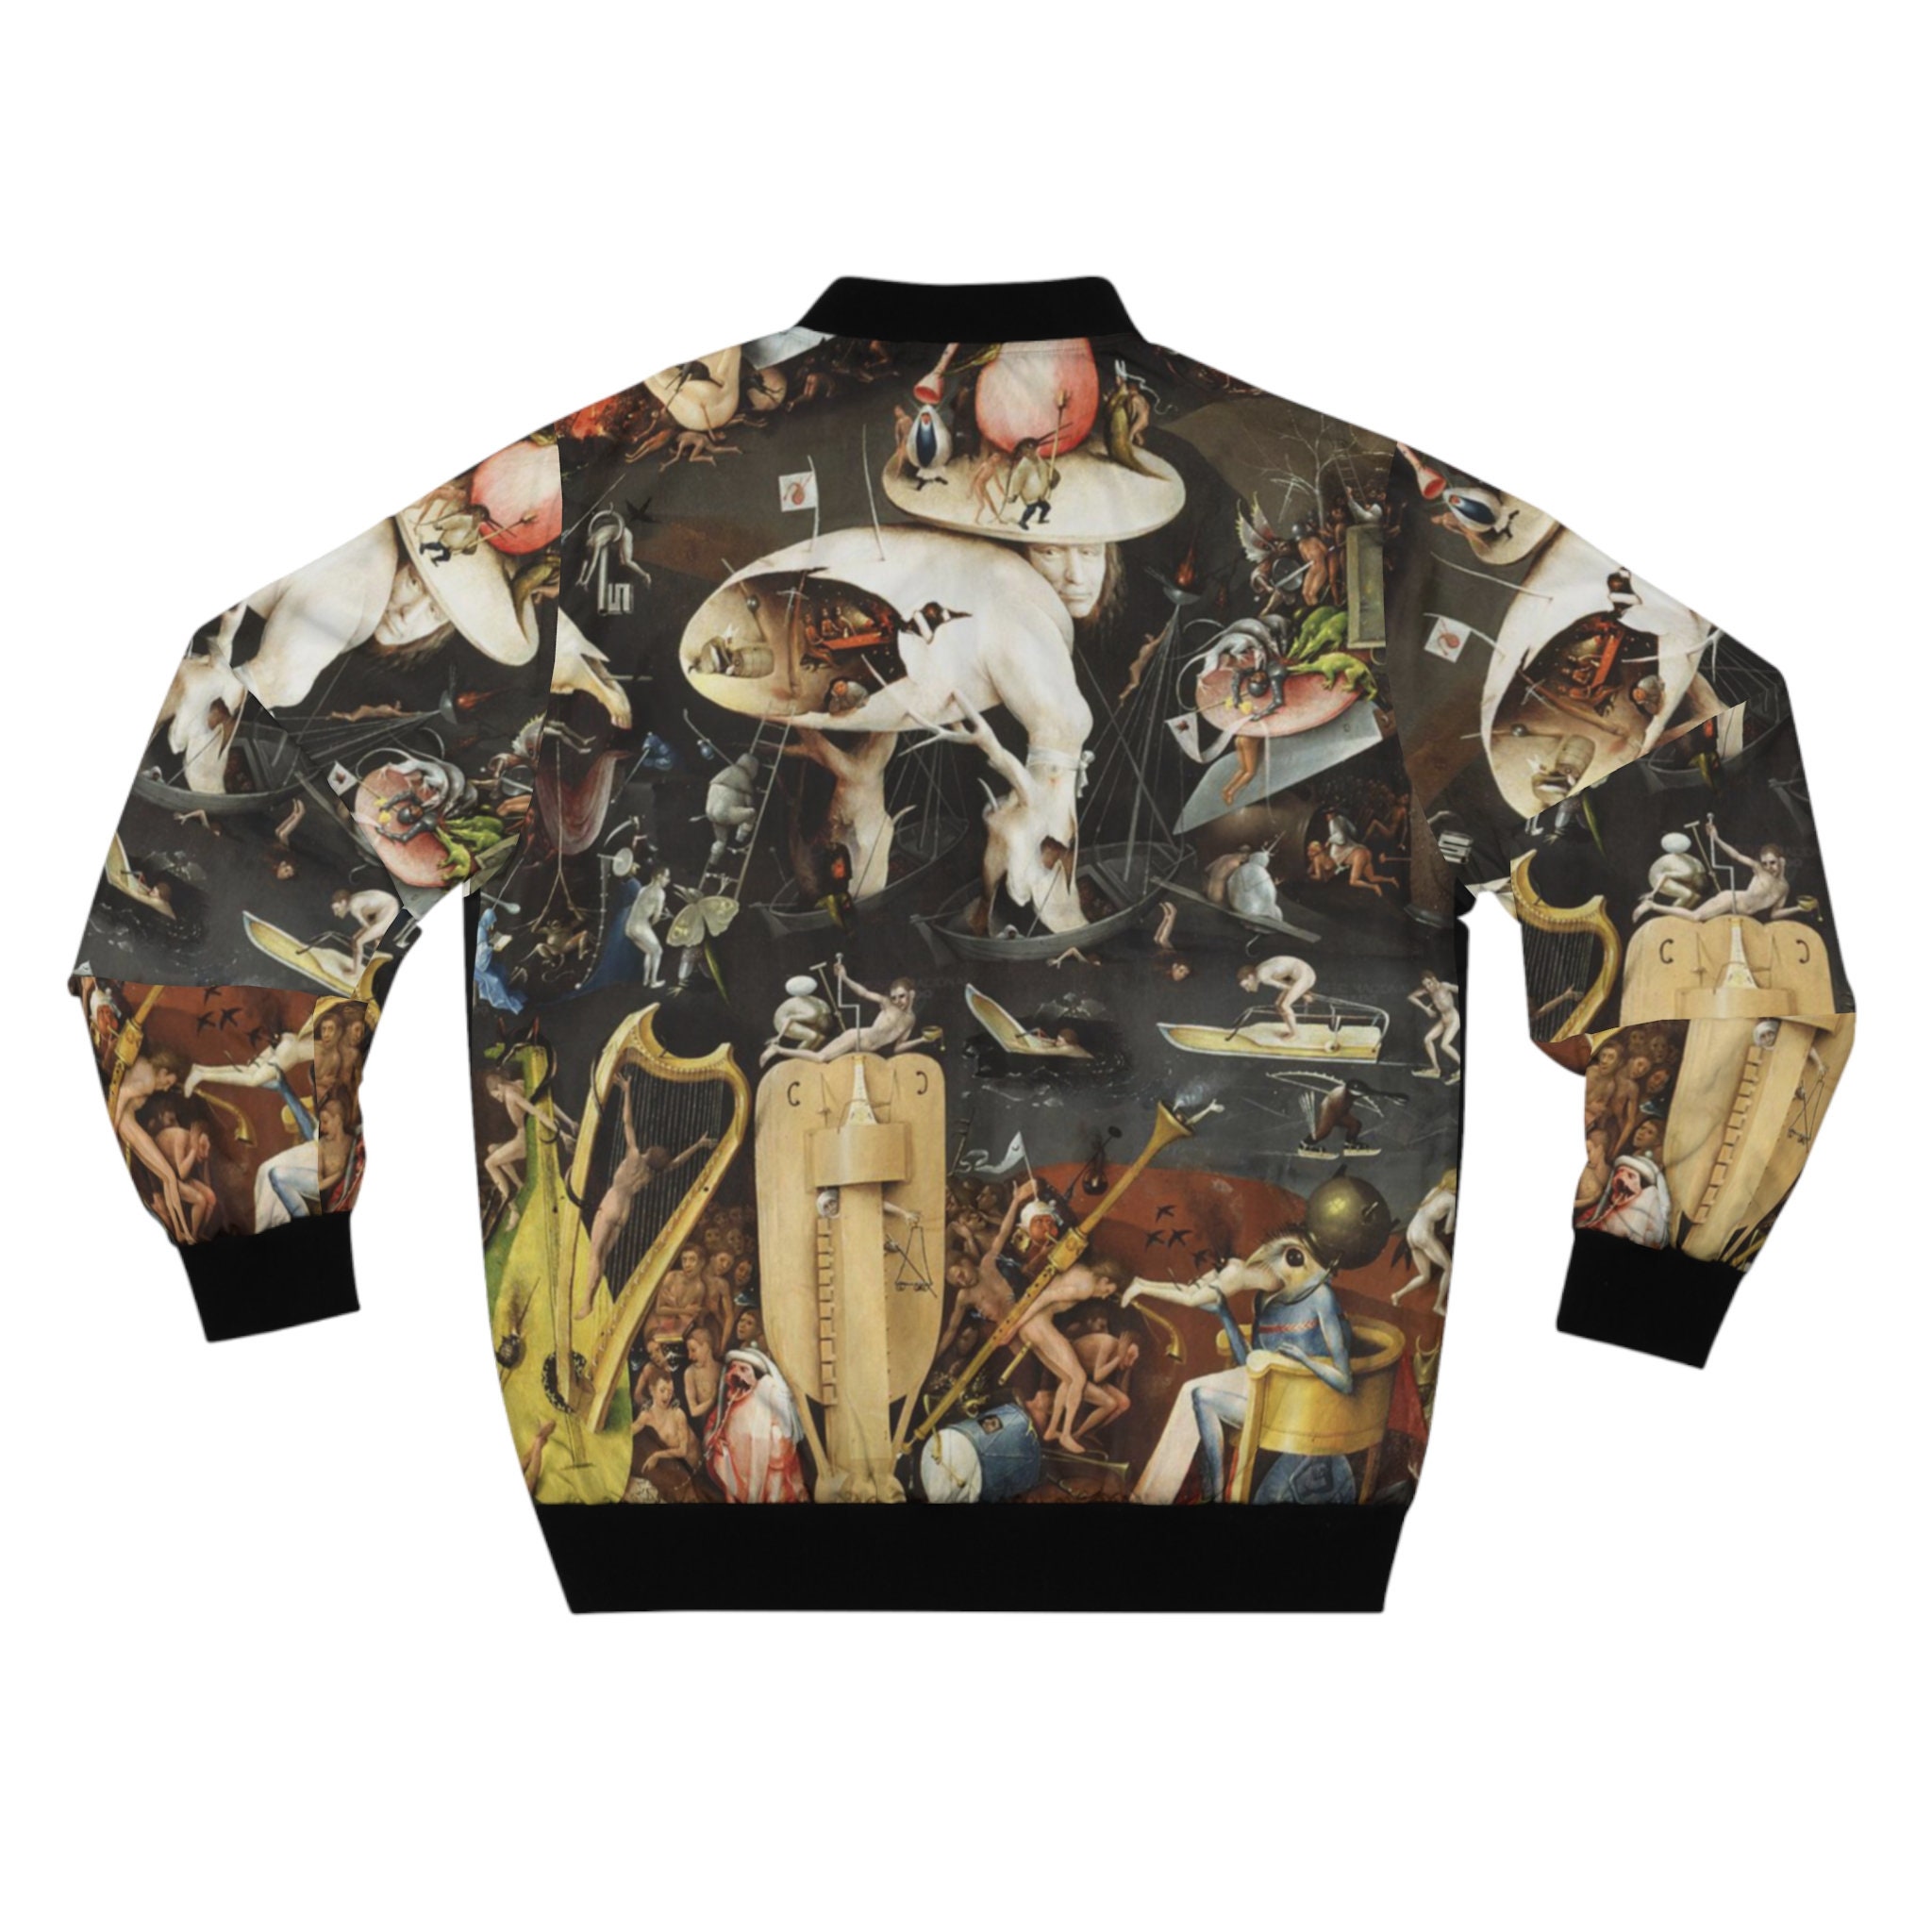 Hieronymus Bosch Men's Bomber Jacket, Aesthetic Medieval Art Jacket